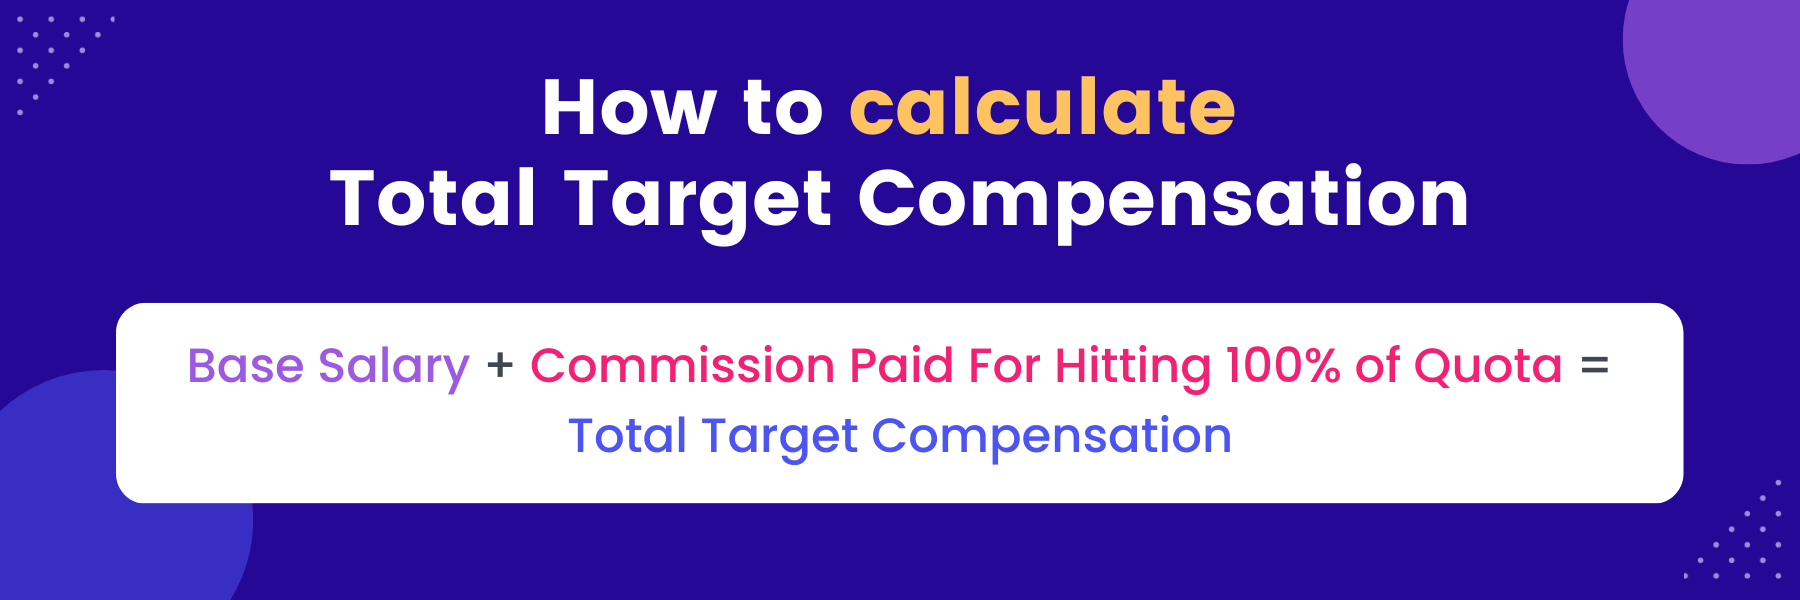 calculating total target compensation ttc